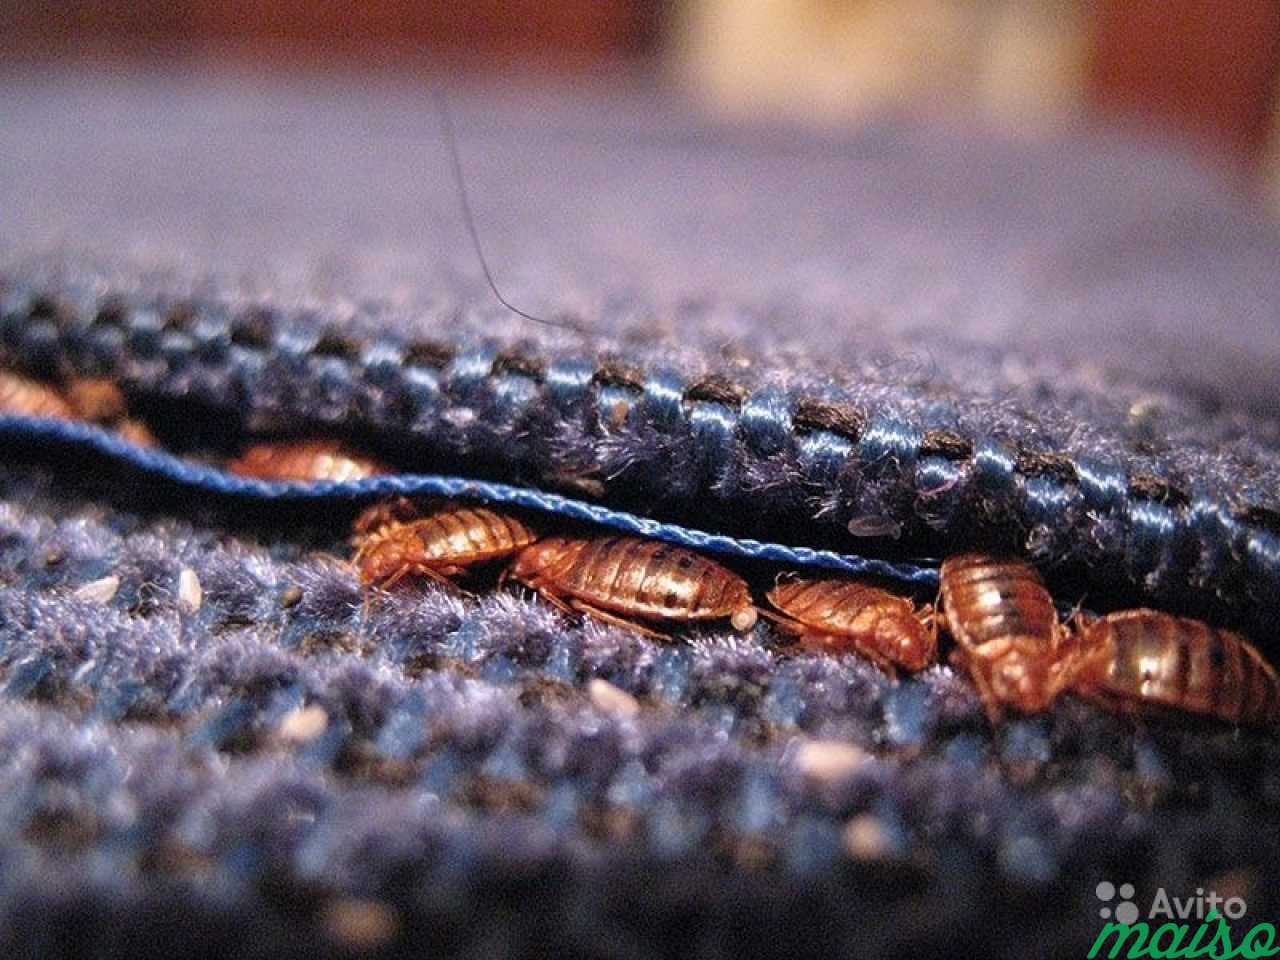 Тараканы в диване откуда